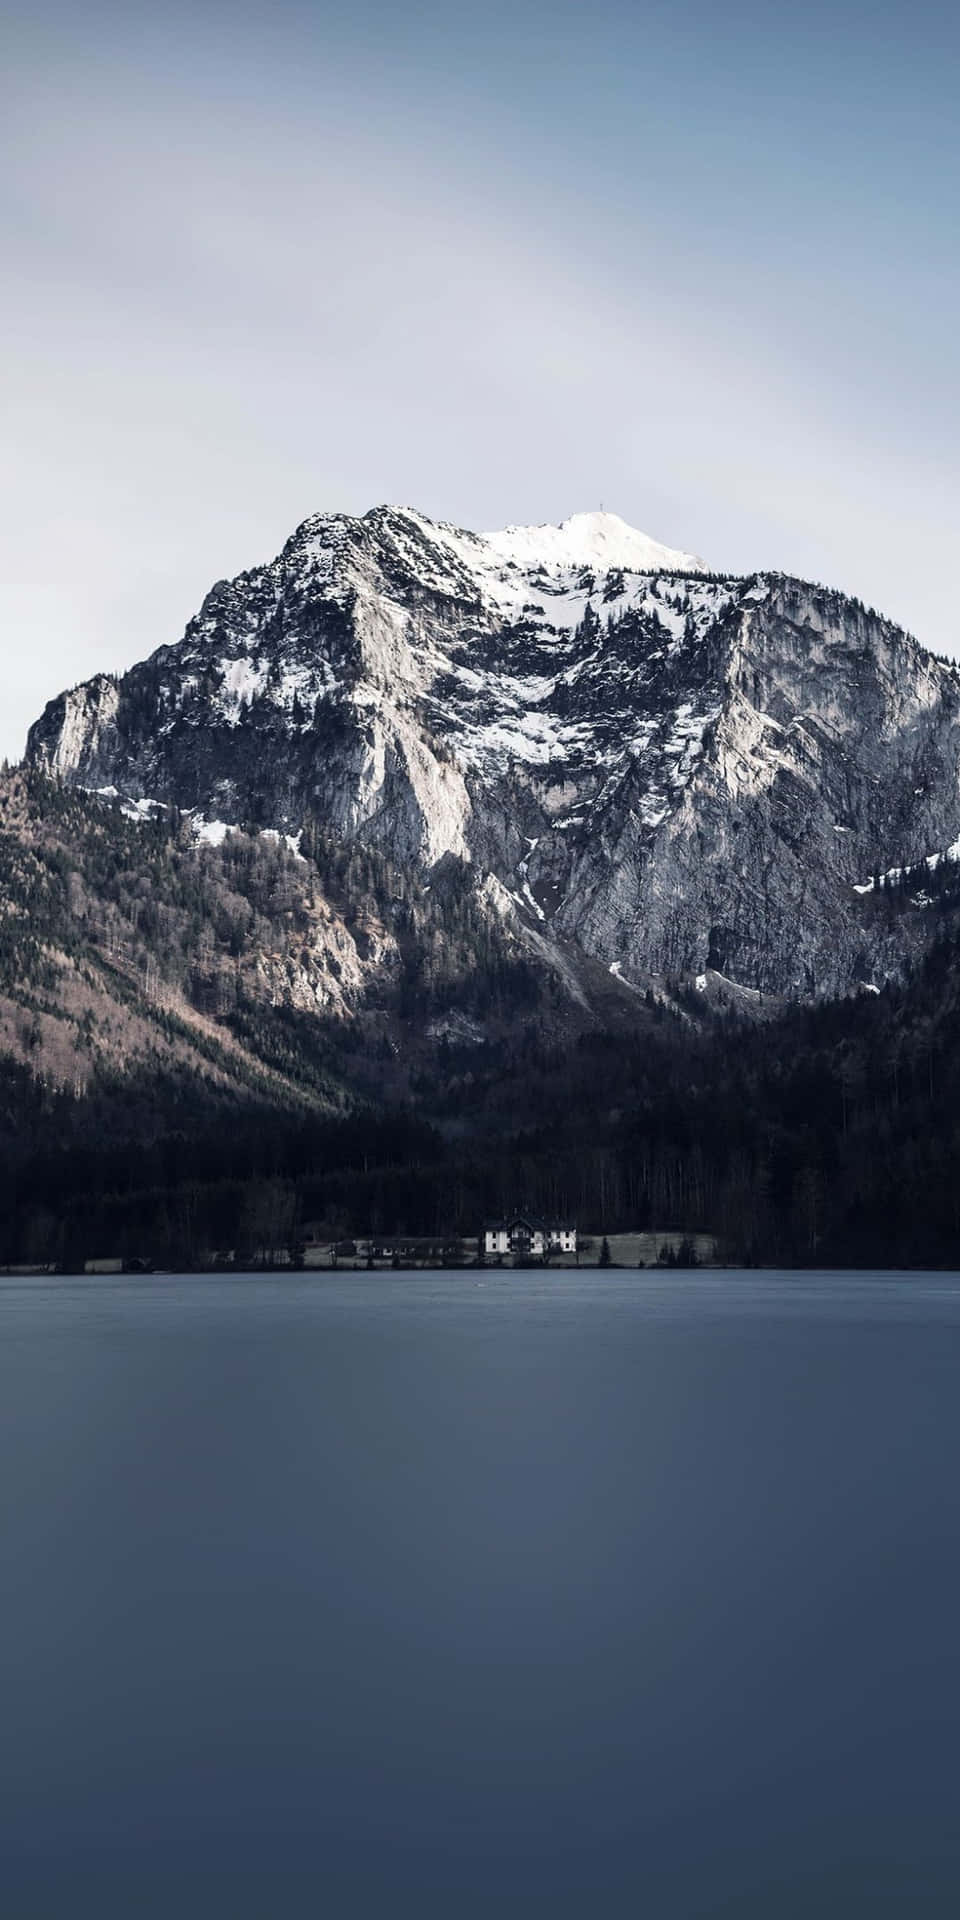 Pixel 3 Winter Background Huge Snowy Mountain